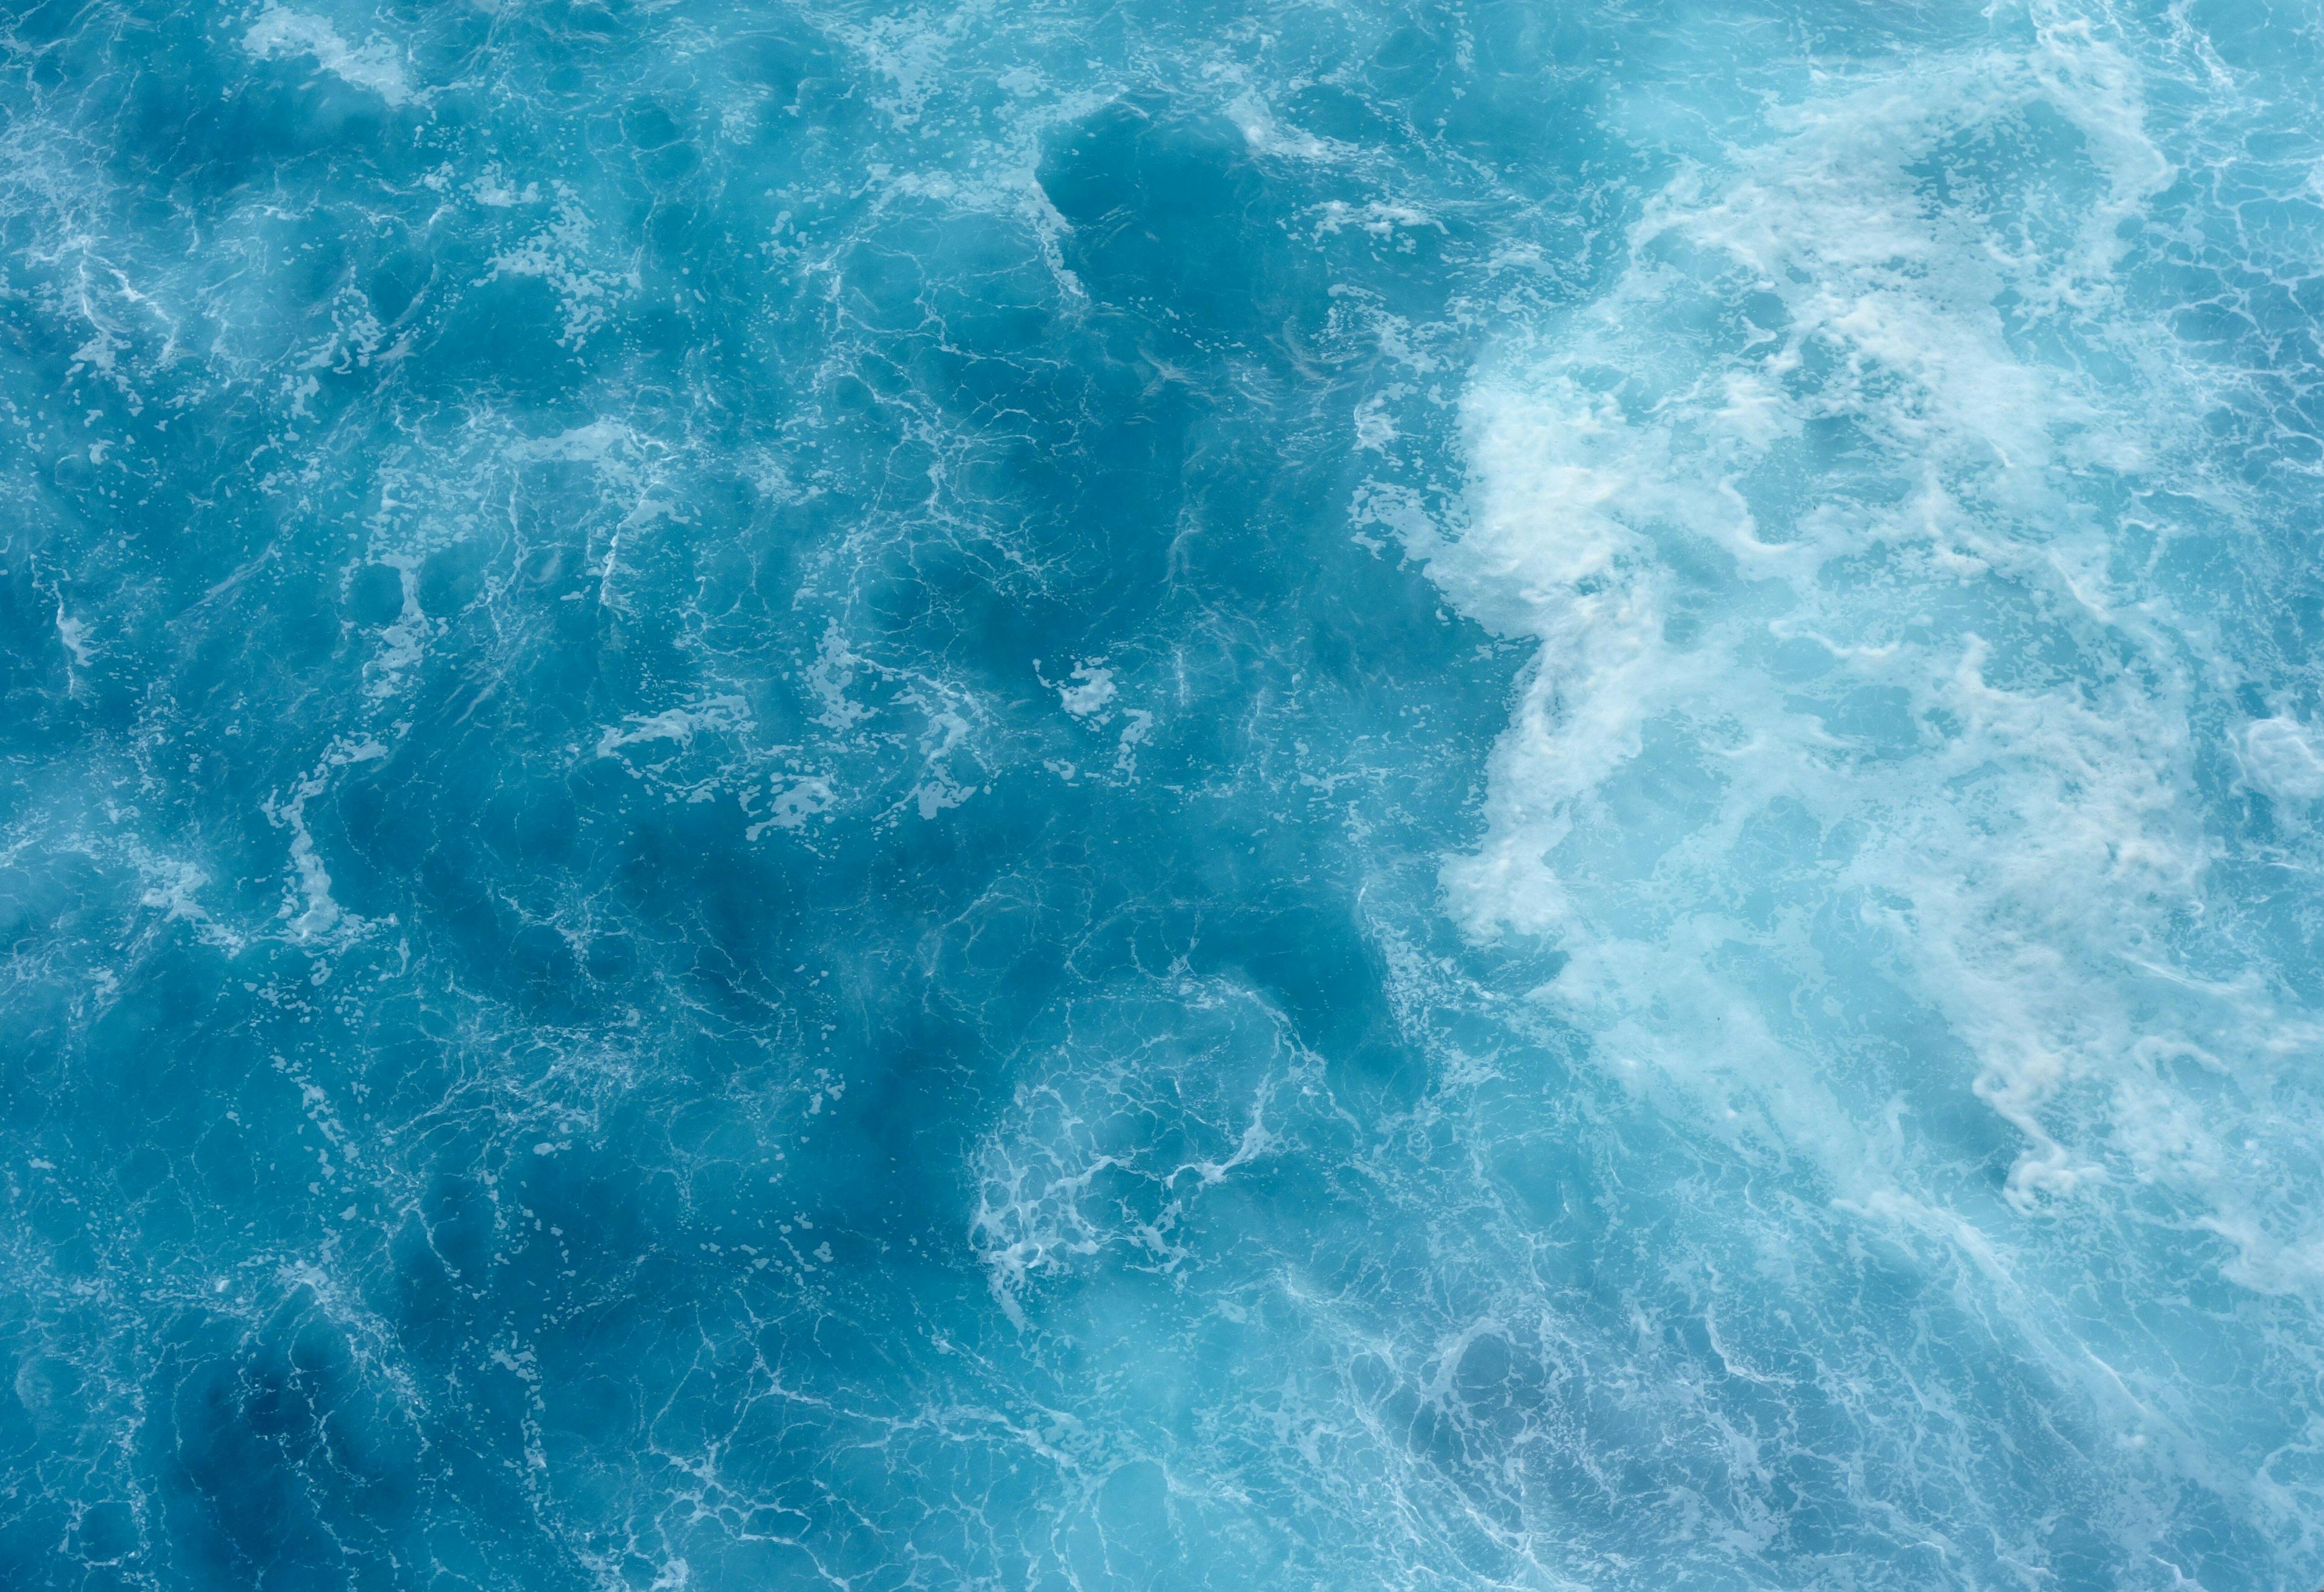 Sea water texture | Image Credit: © pharut - stock.adobe.com